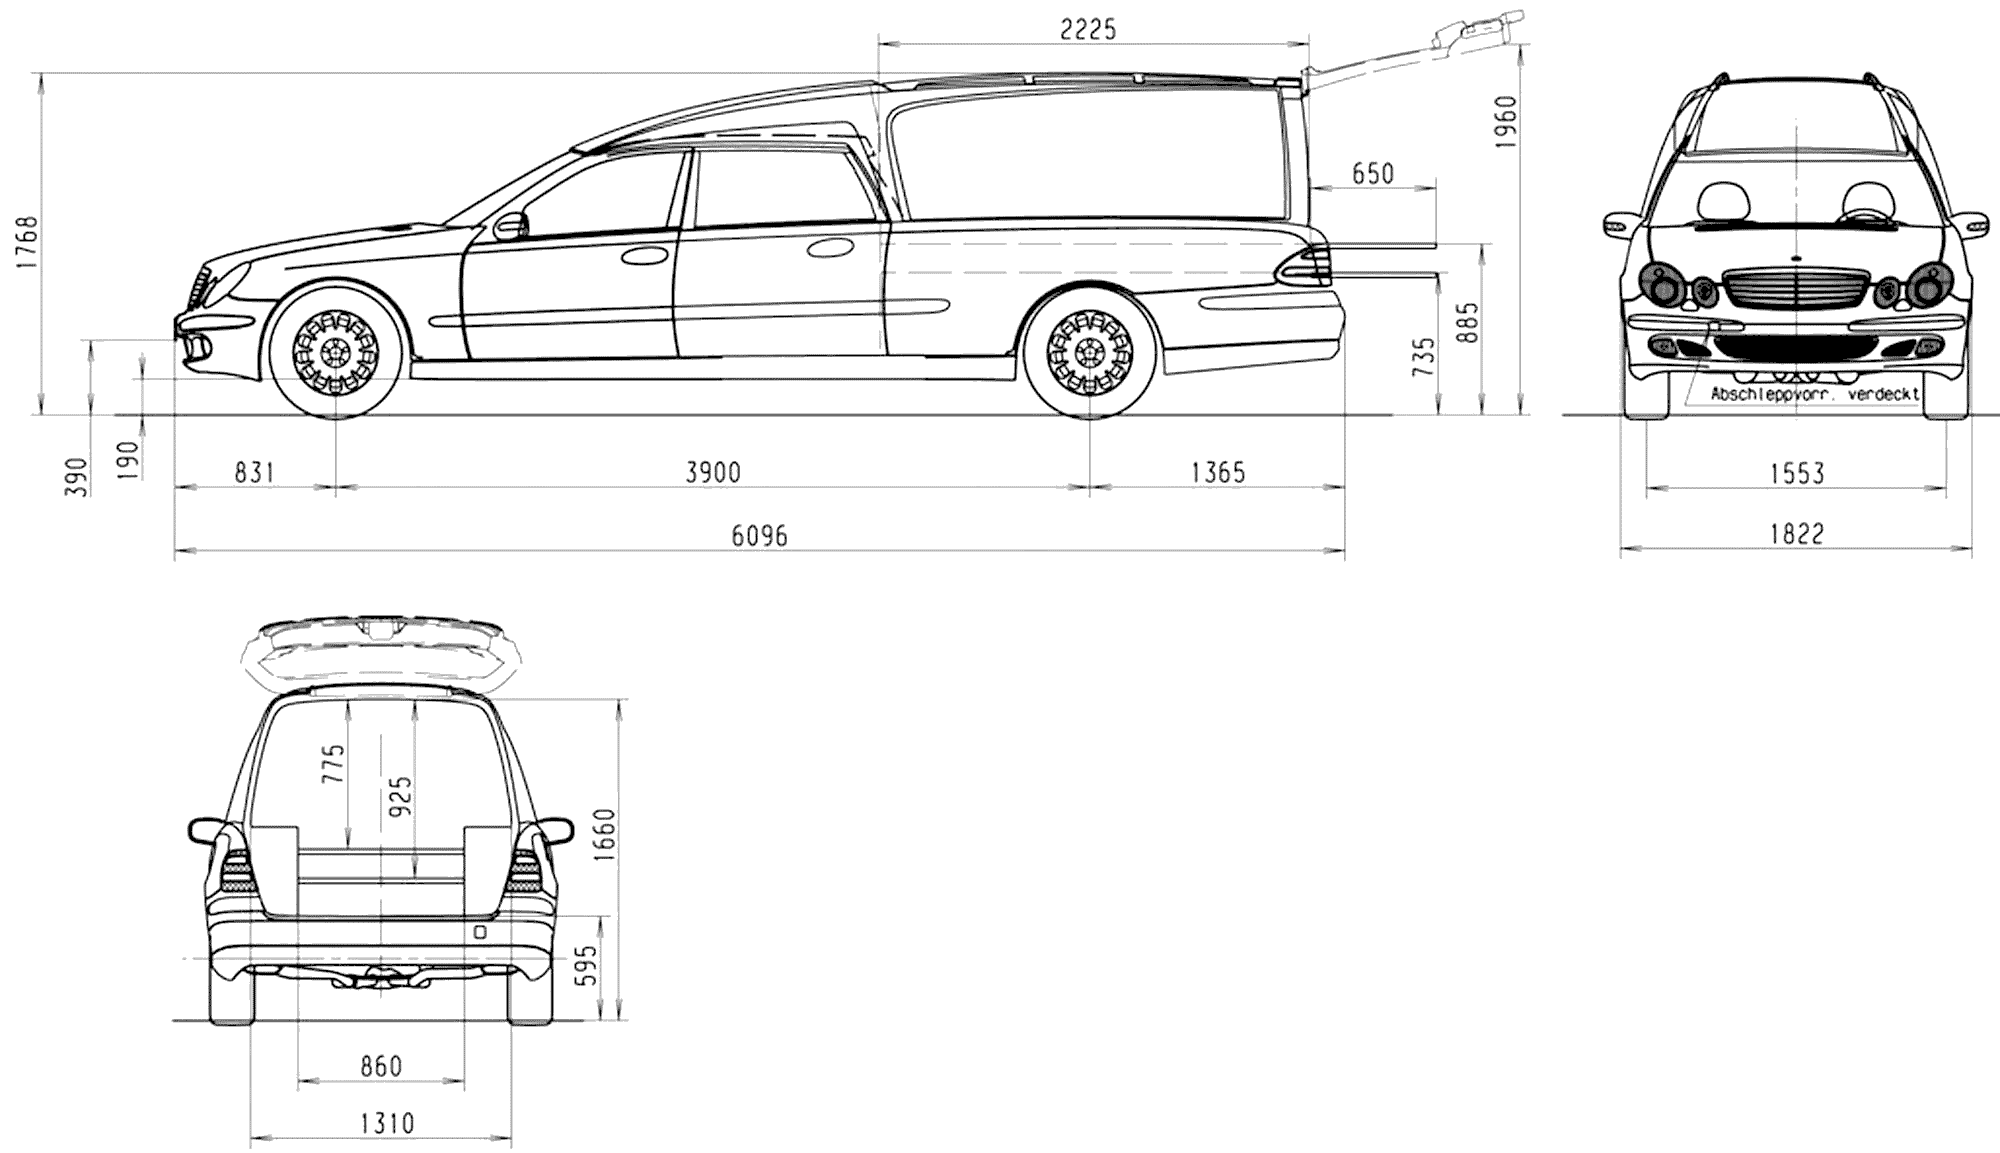 Mercedes-Benz Hearse blueprint